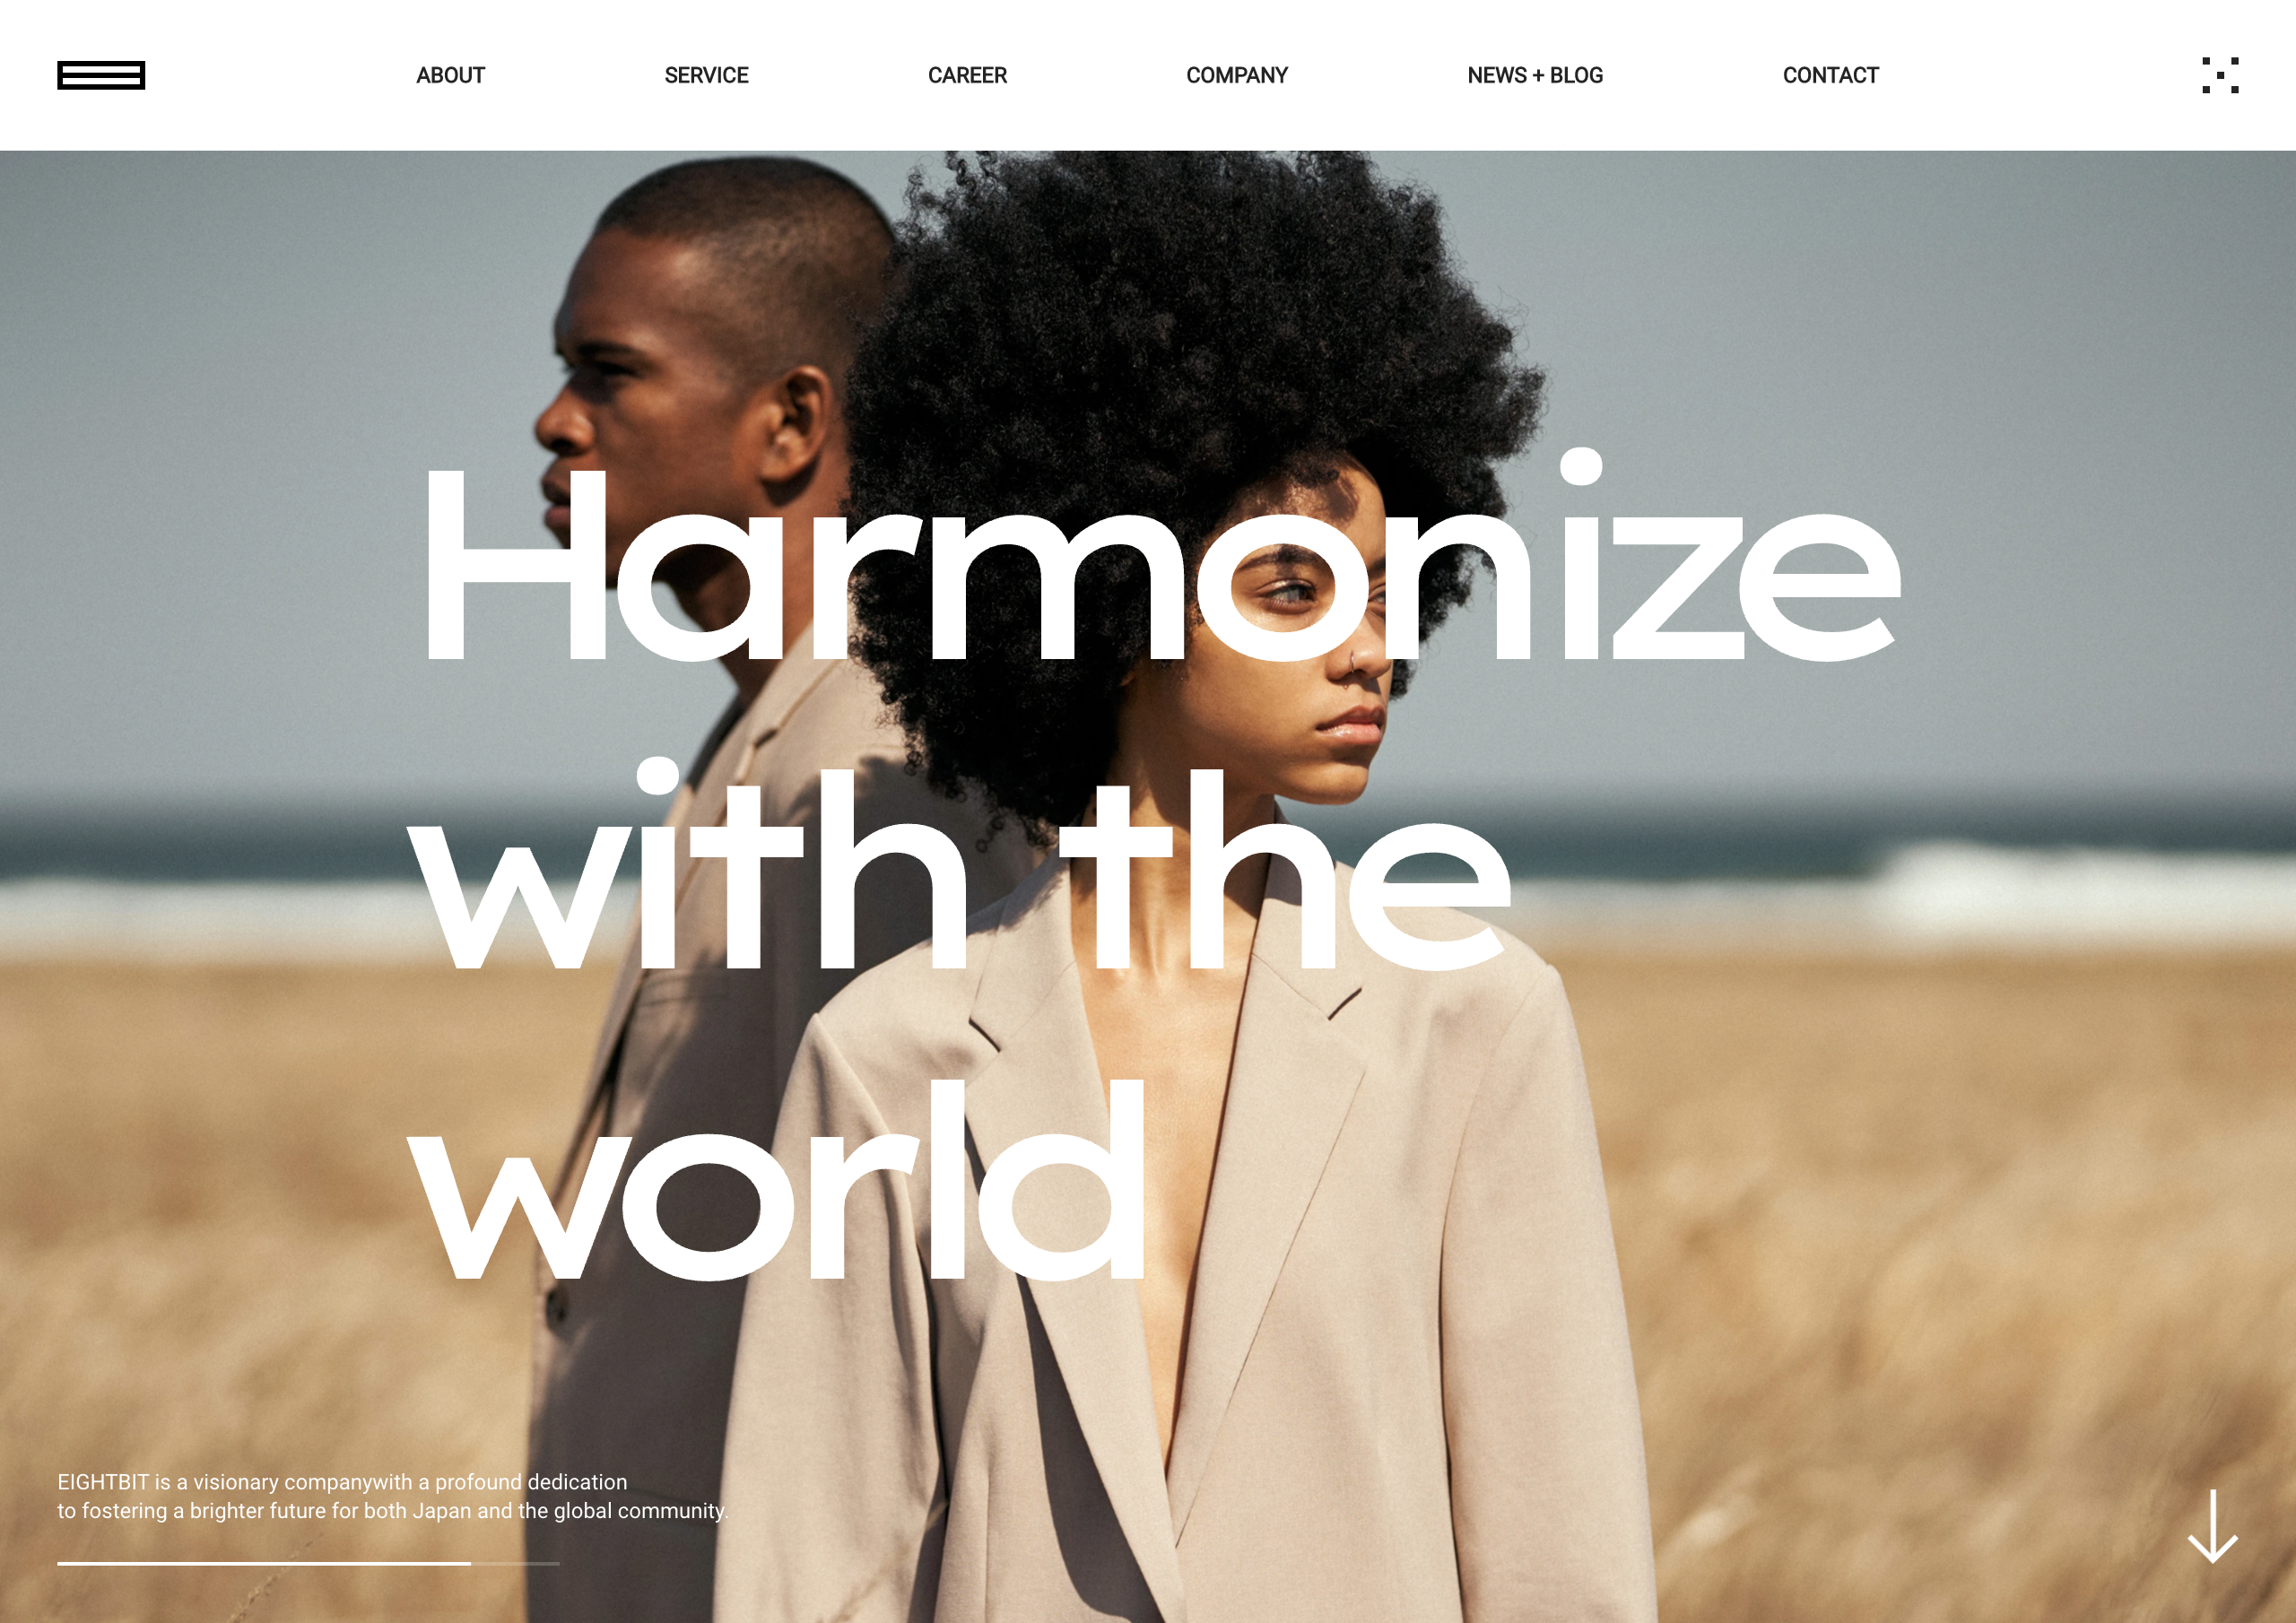 EIGHTBIT Co., Ltd. | Harmonize with the world